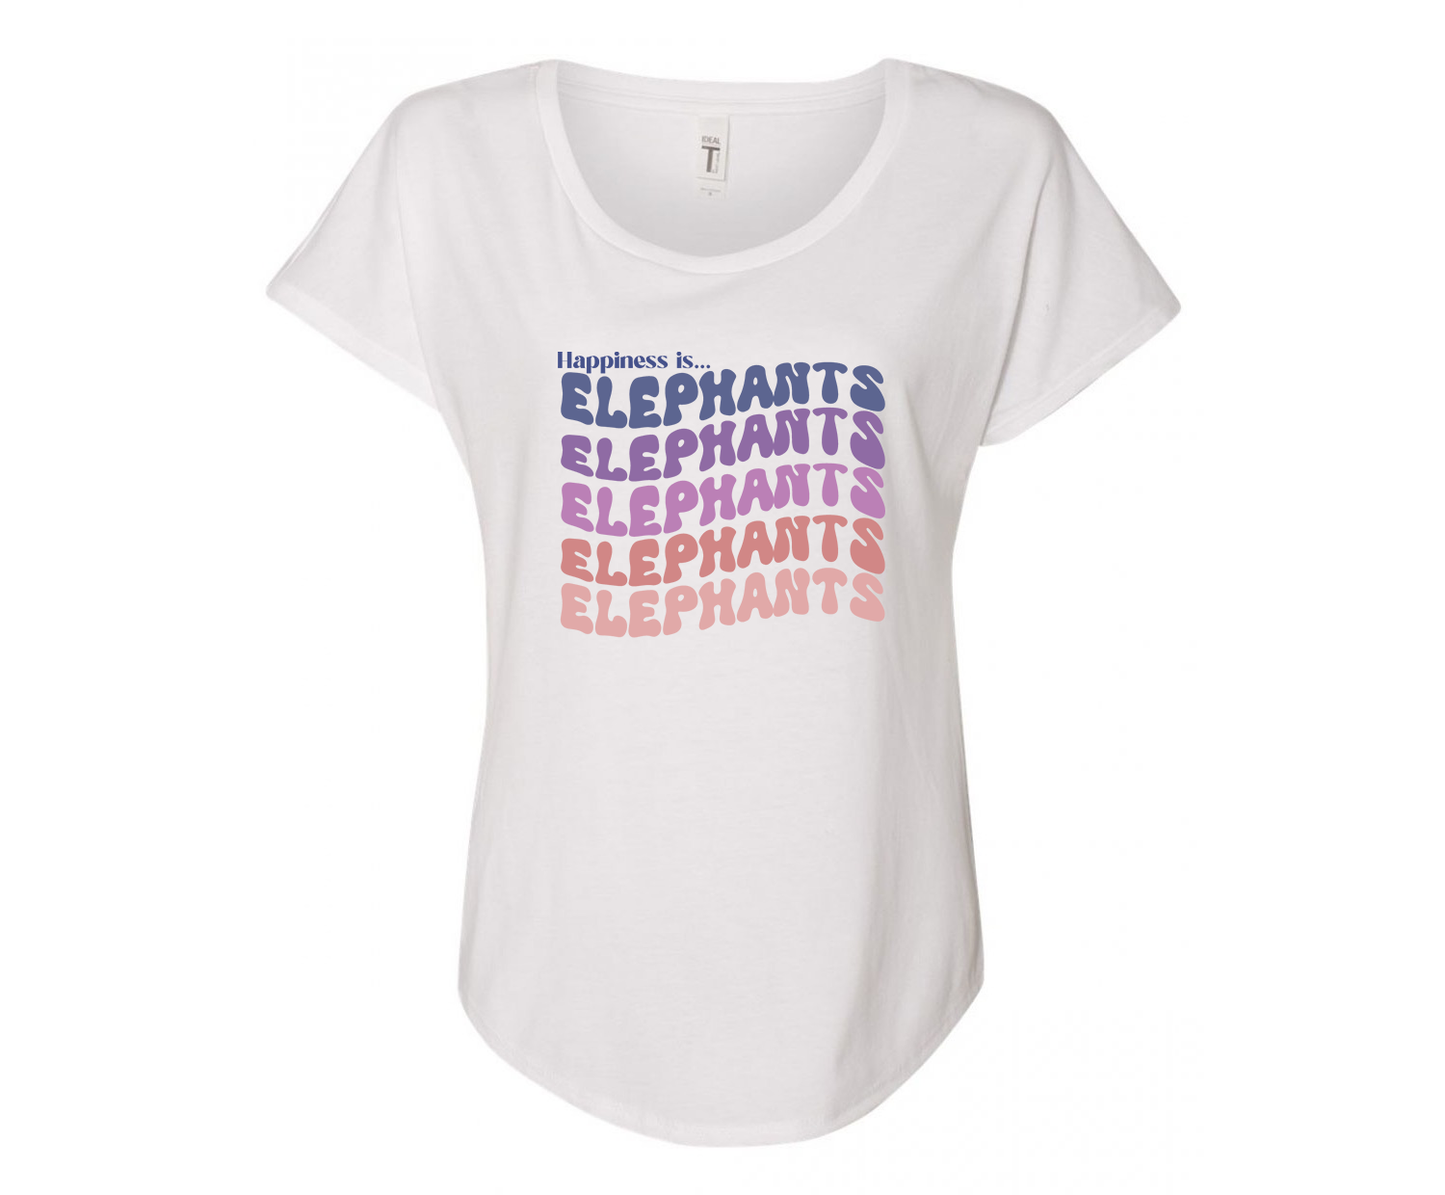 Happiness is Elephants Ladies Tee Shirt - In White & Grey